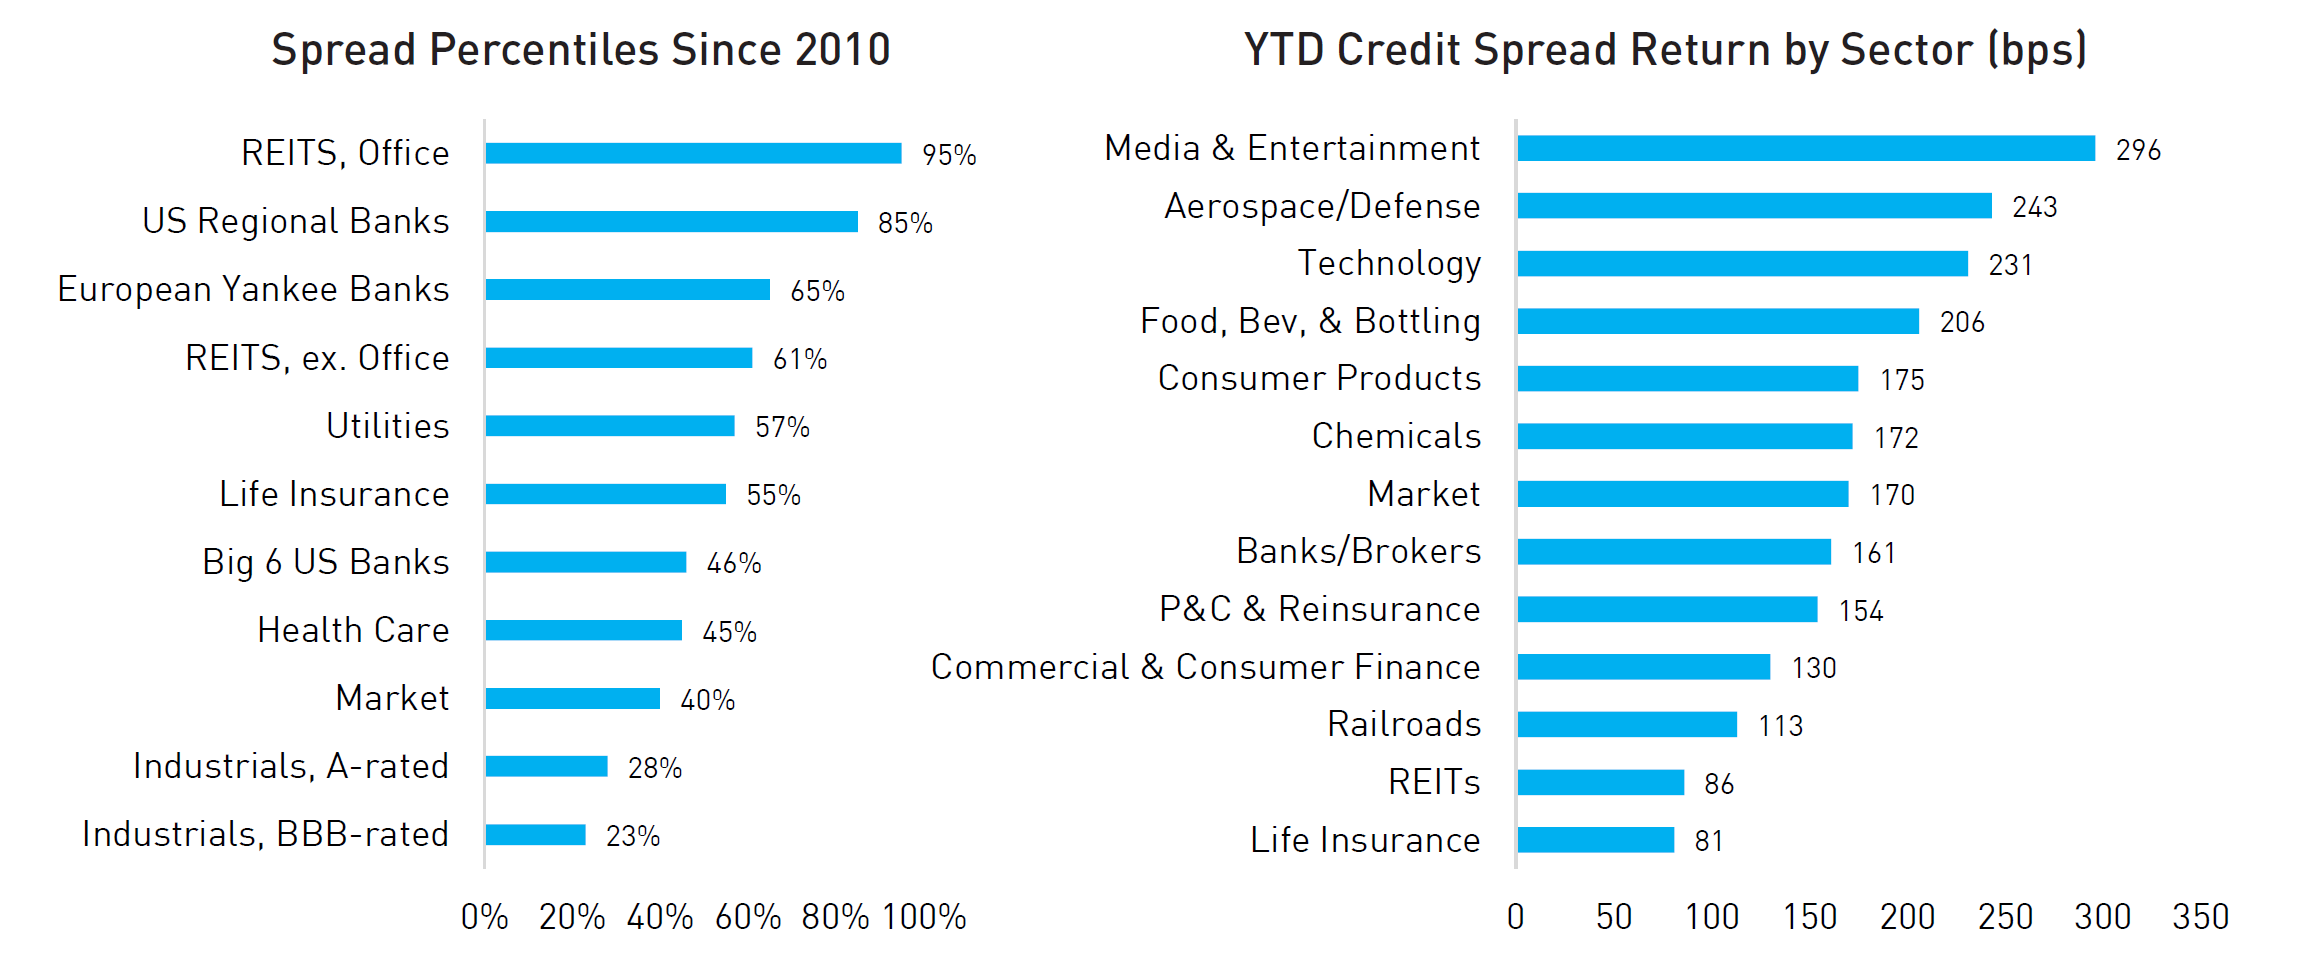 Spread Percentiles Since 2010 & YTD Credit Spread Return by Sector (bps)